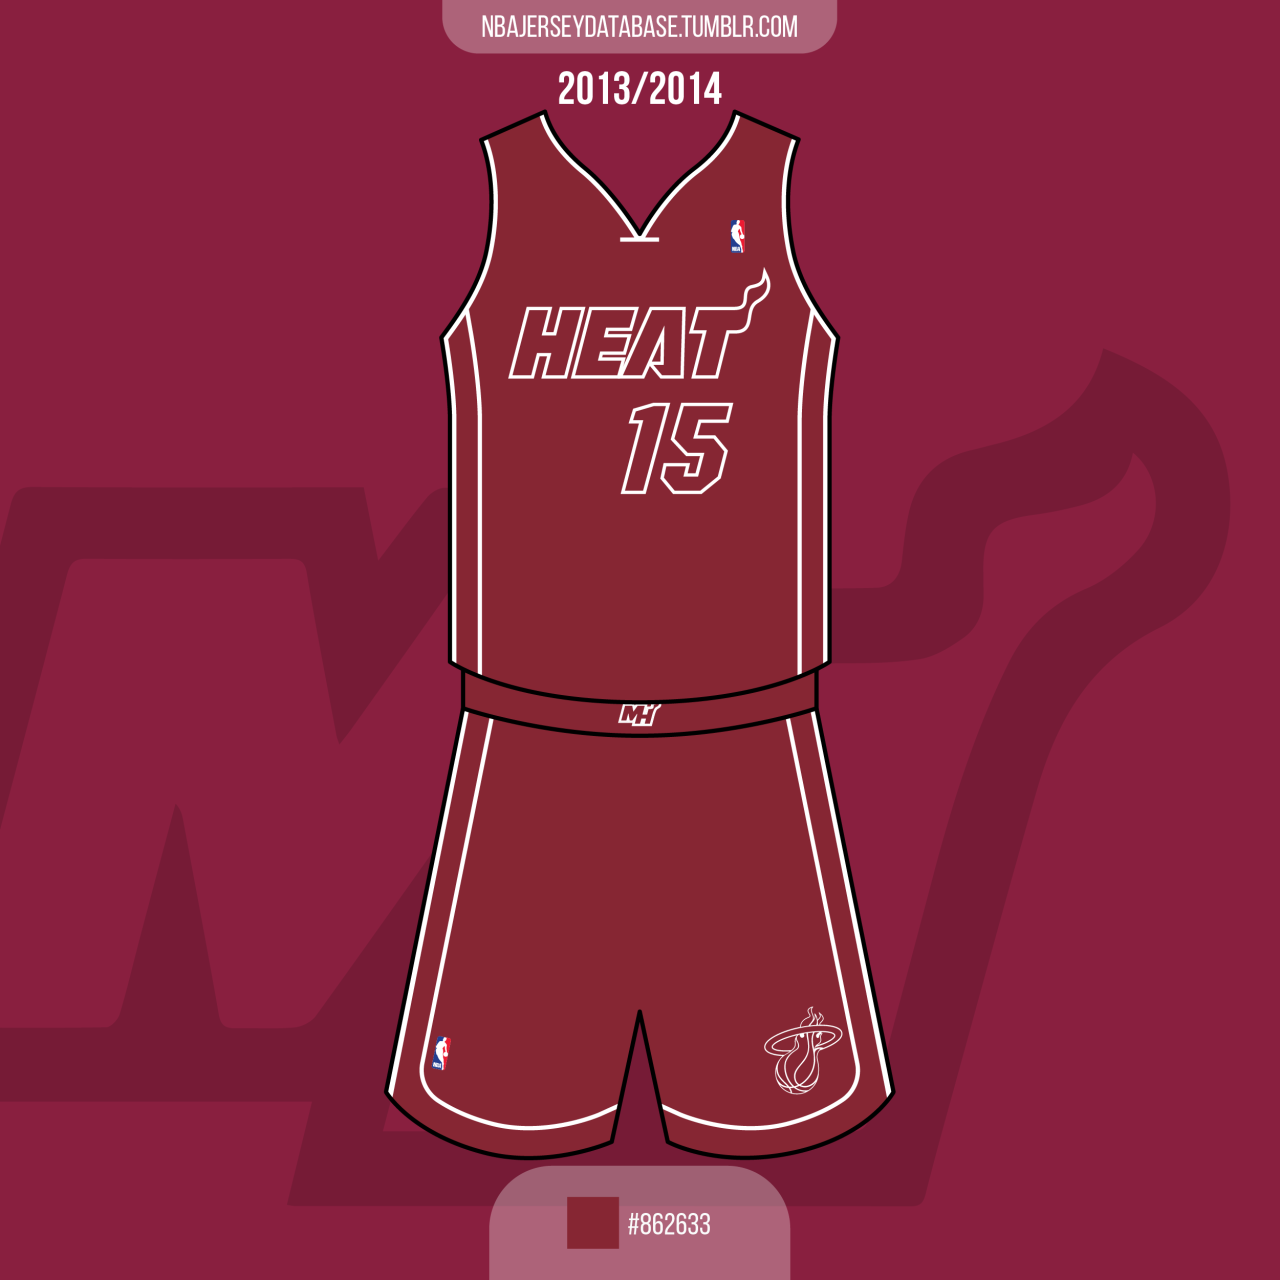 NBA Jersey Database, Miami Heat Alternate (Red Hot) Jersey 2013-2014